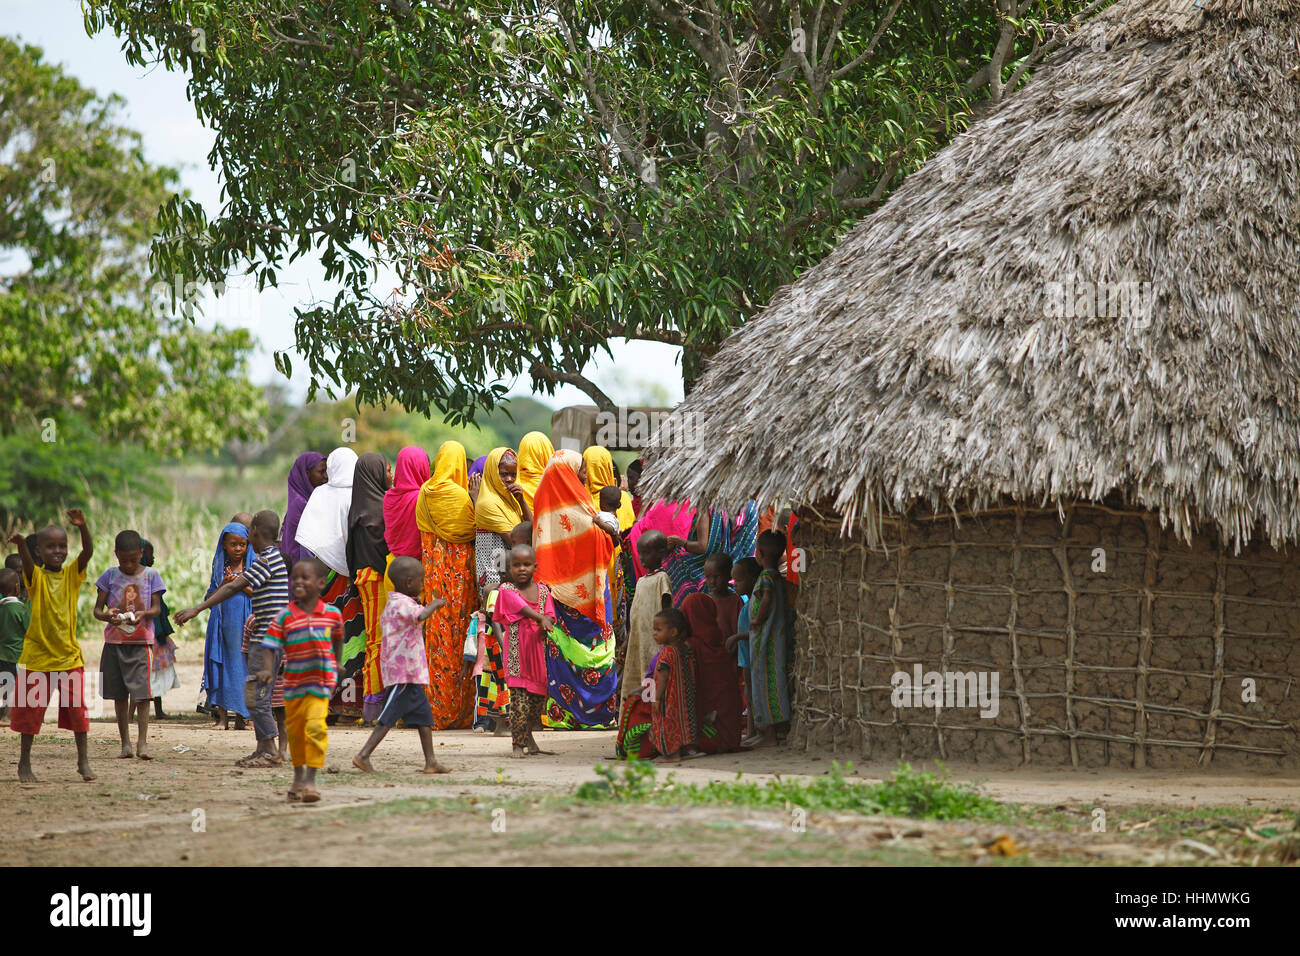 Women and children in colourful clothing next to mud hut, Orma ethnic community, Marafa, Tana River Delta, Kenya Stock Photo